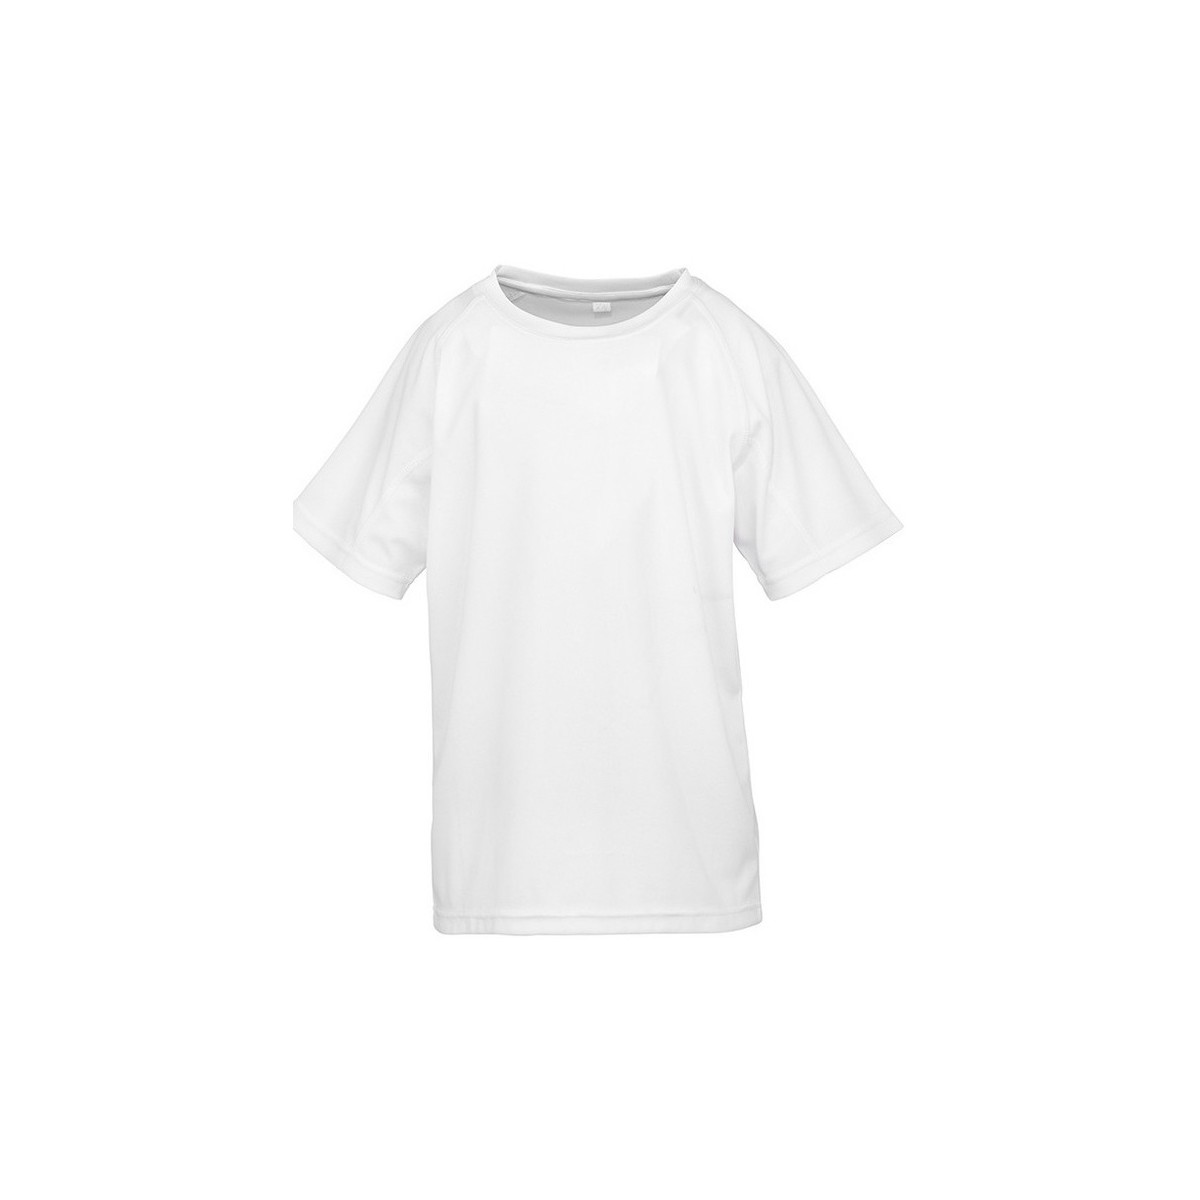 textil Niños Camisetas manga corta Spiro SR287B Blanco